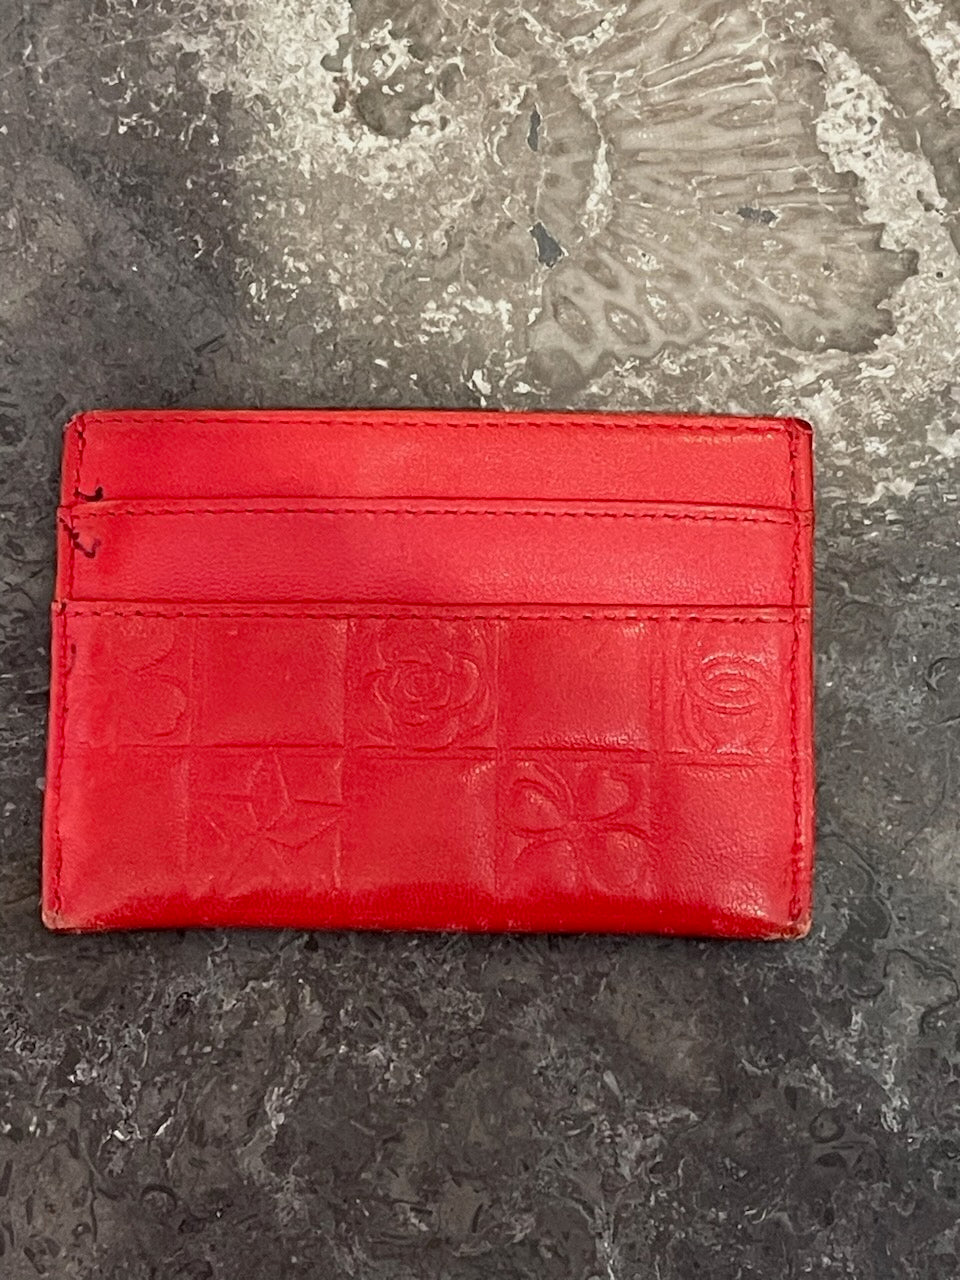 Porte-cartes Chanel rouge